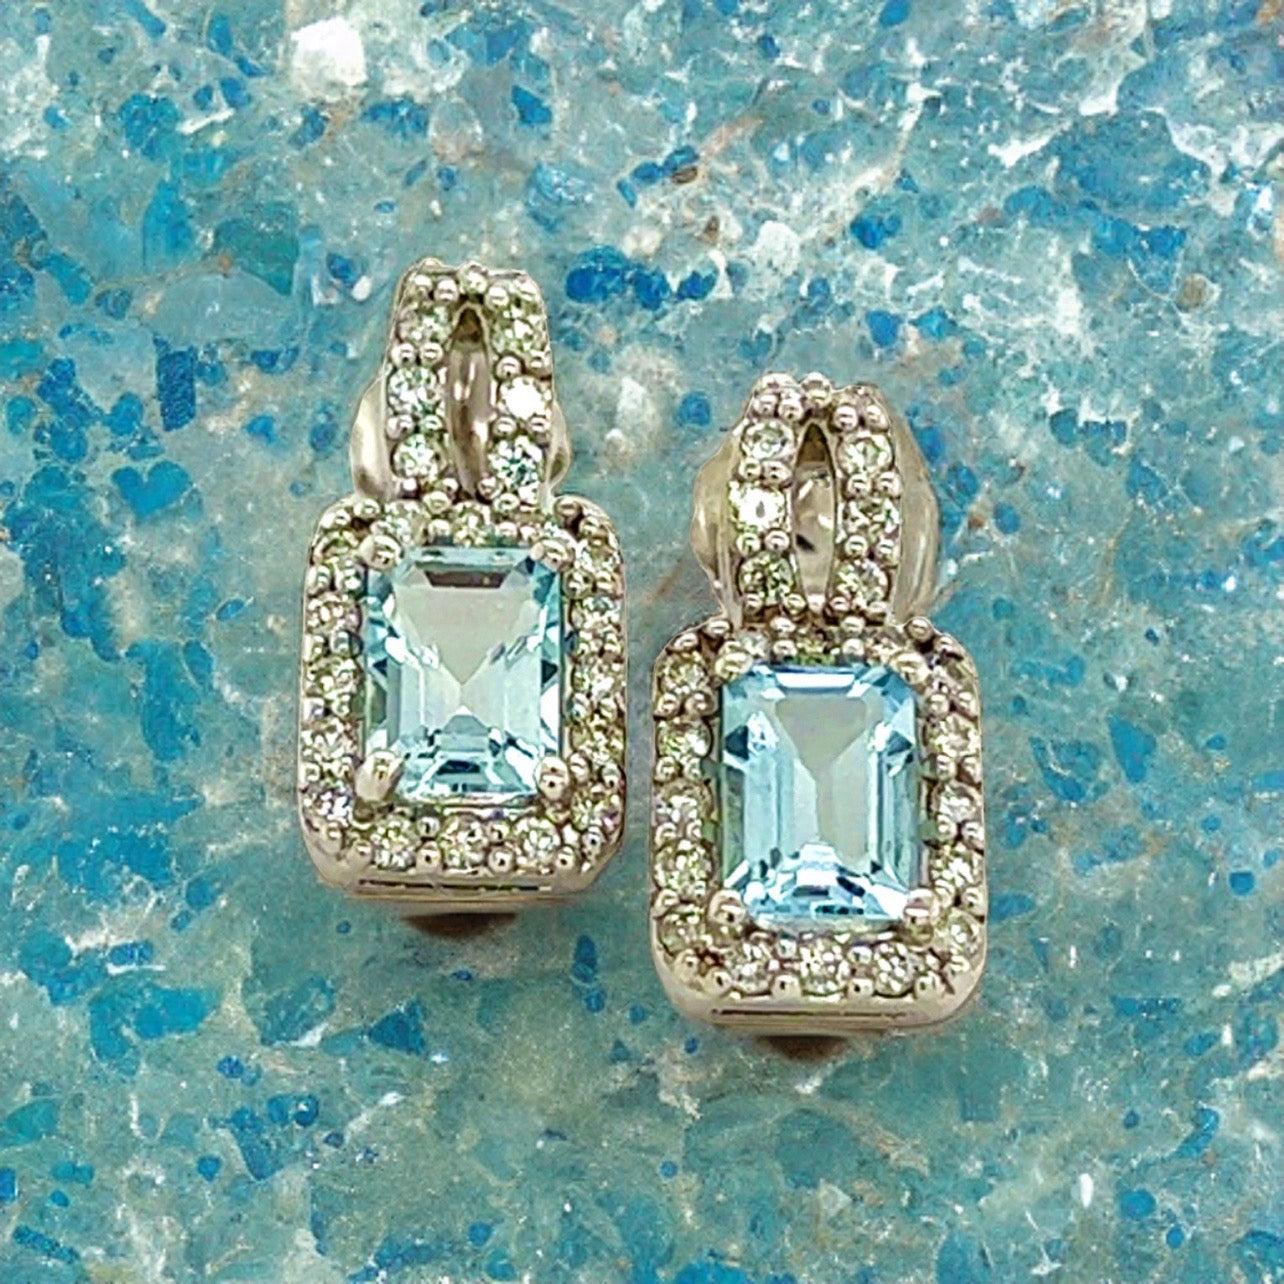 Natural Aquamarine Diamond Earrings 14k Gold 2.38 TCW Certified $4,950 215092 - Certified Fine Jewelry